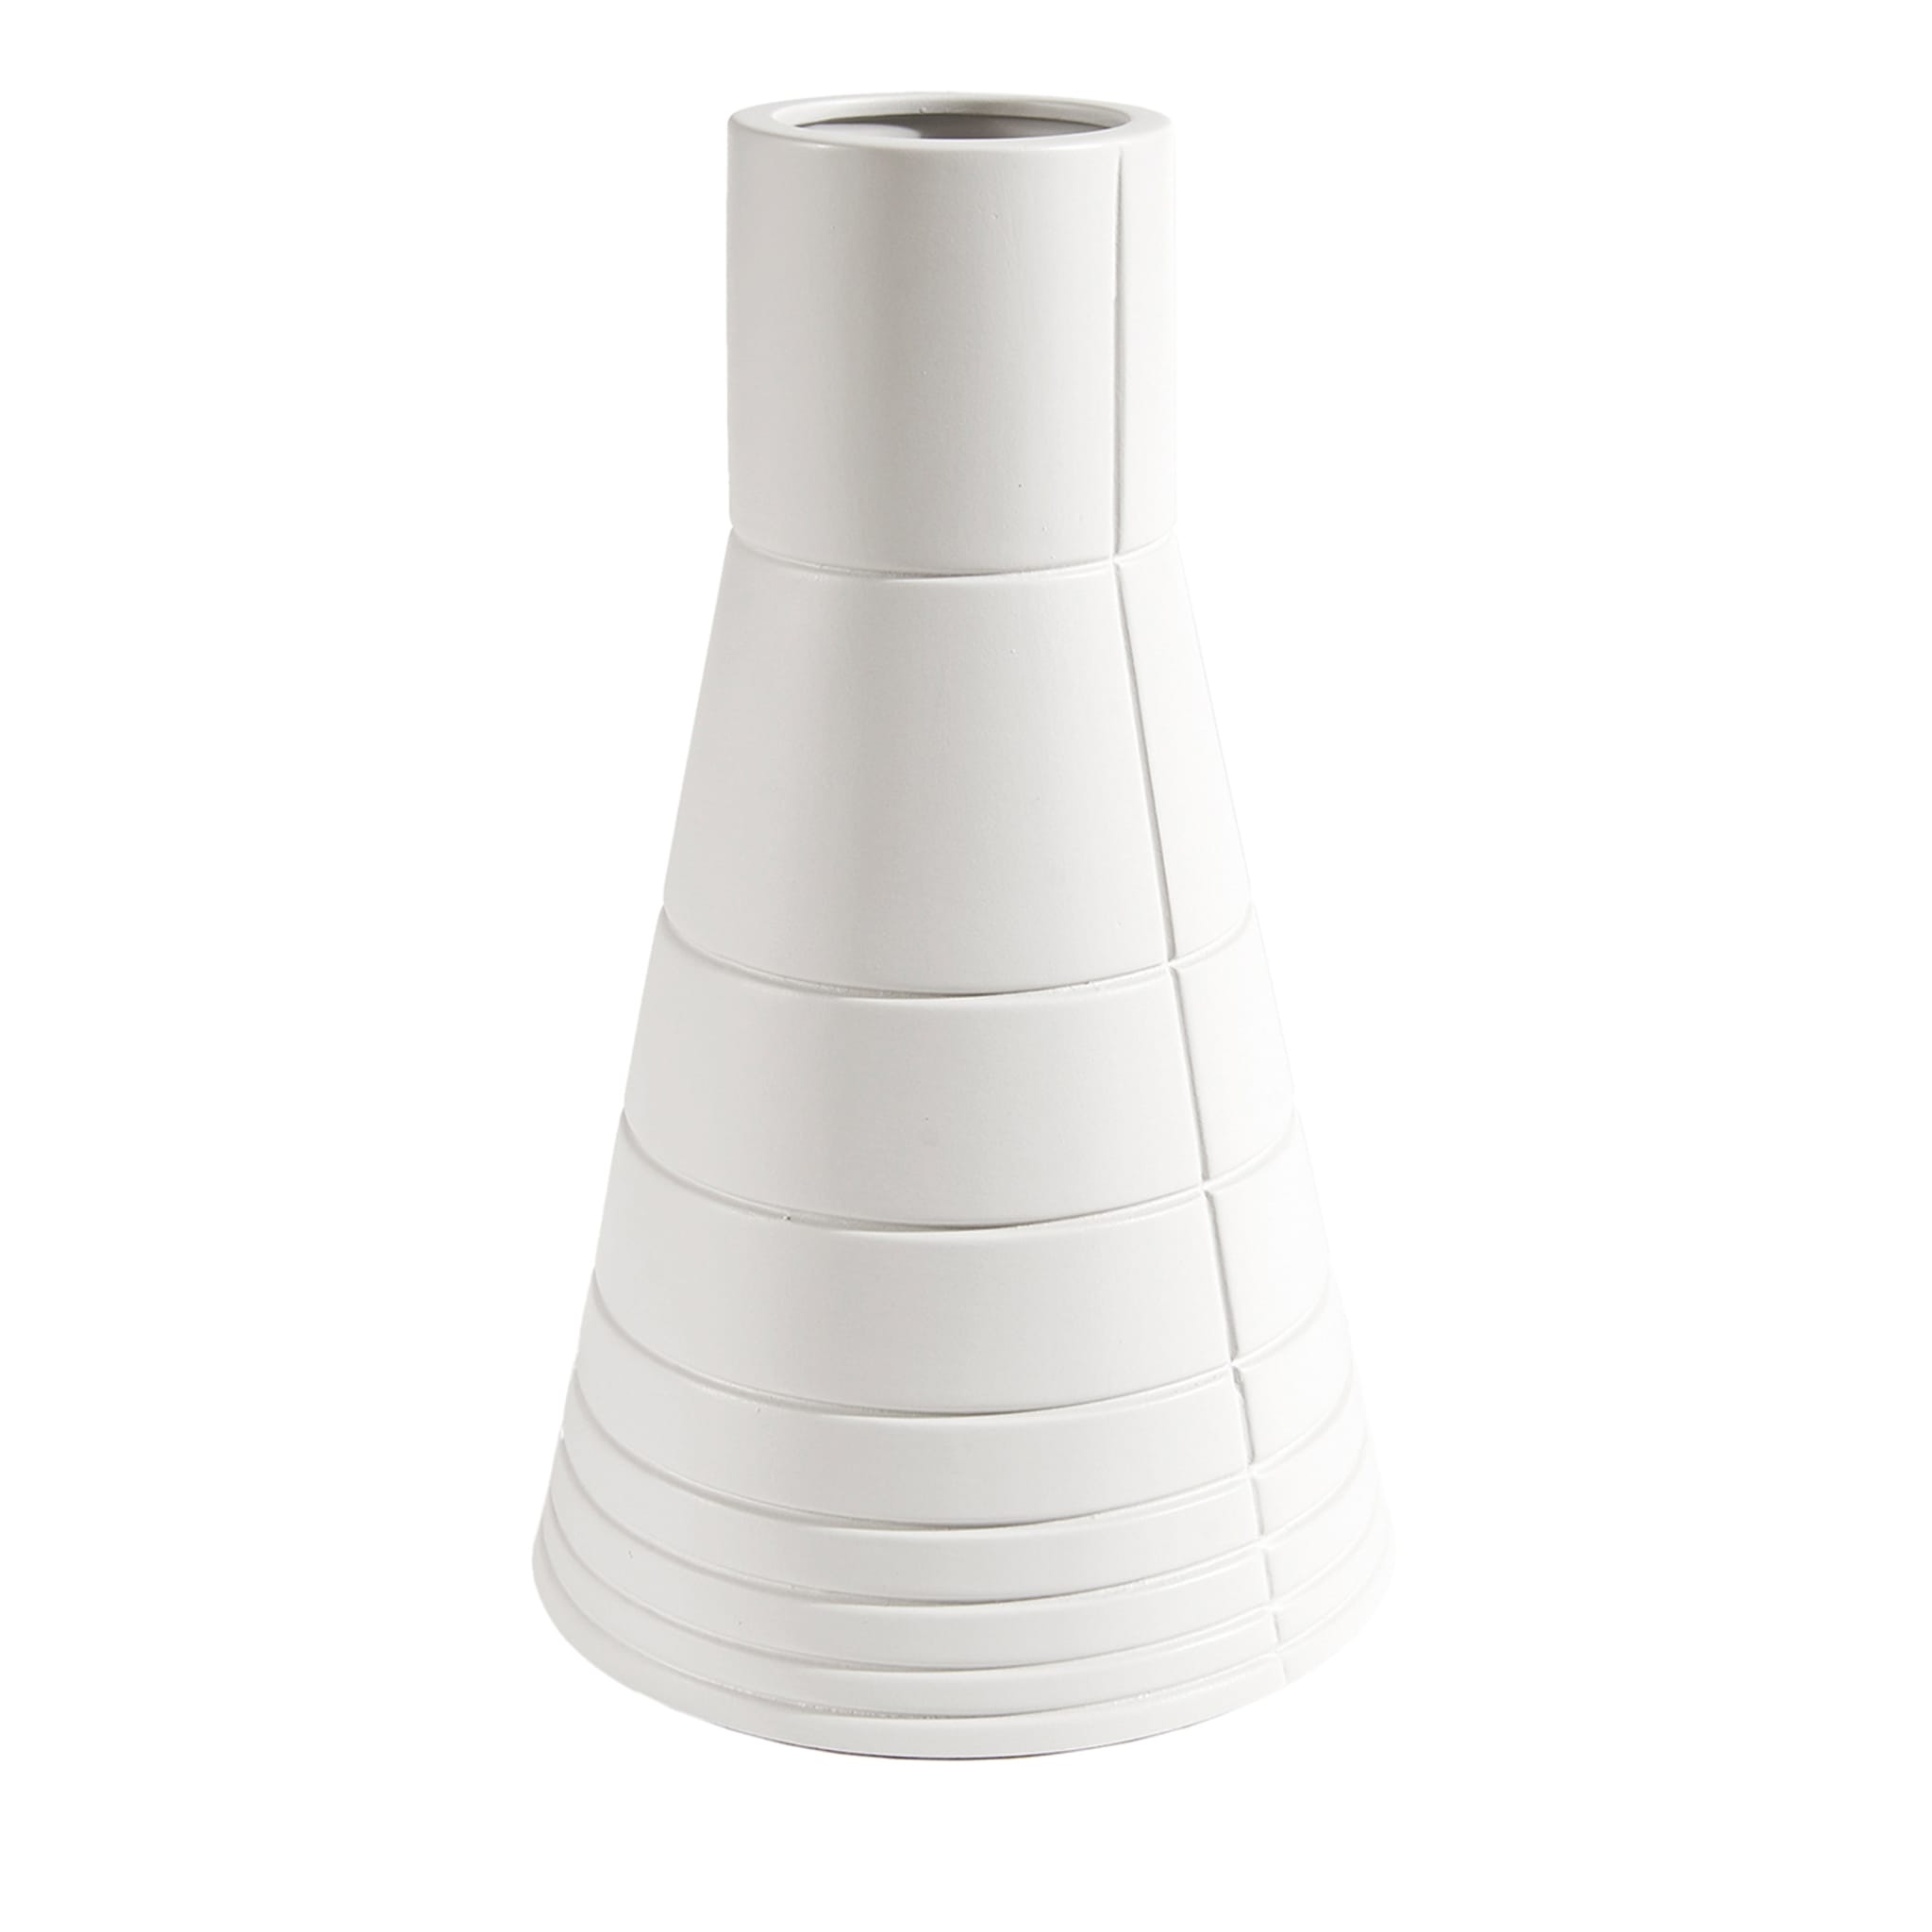 Rikuadra Vaso in ceramica bianca #5 - Vista principale